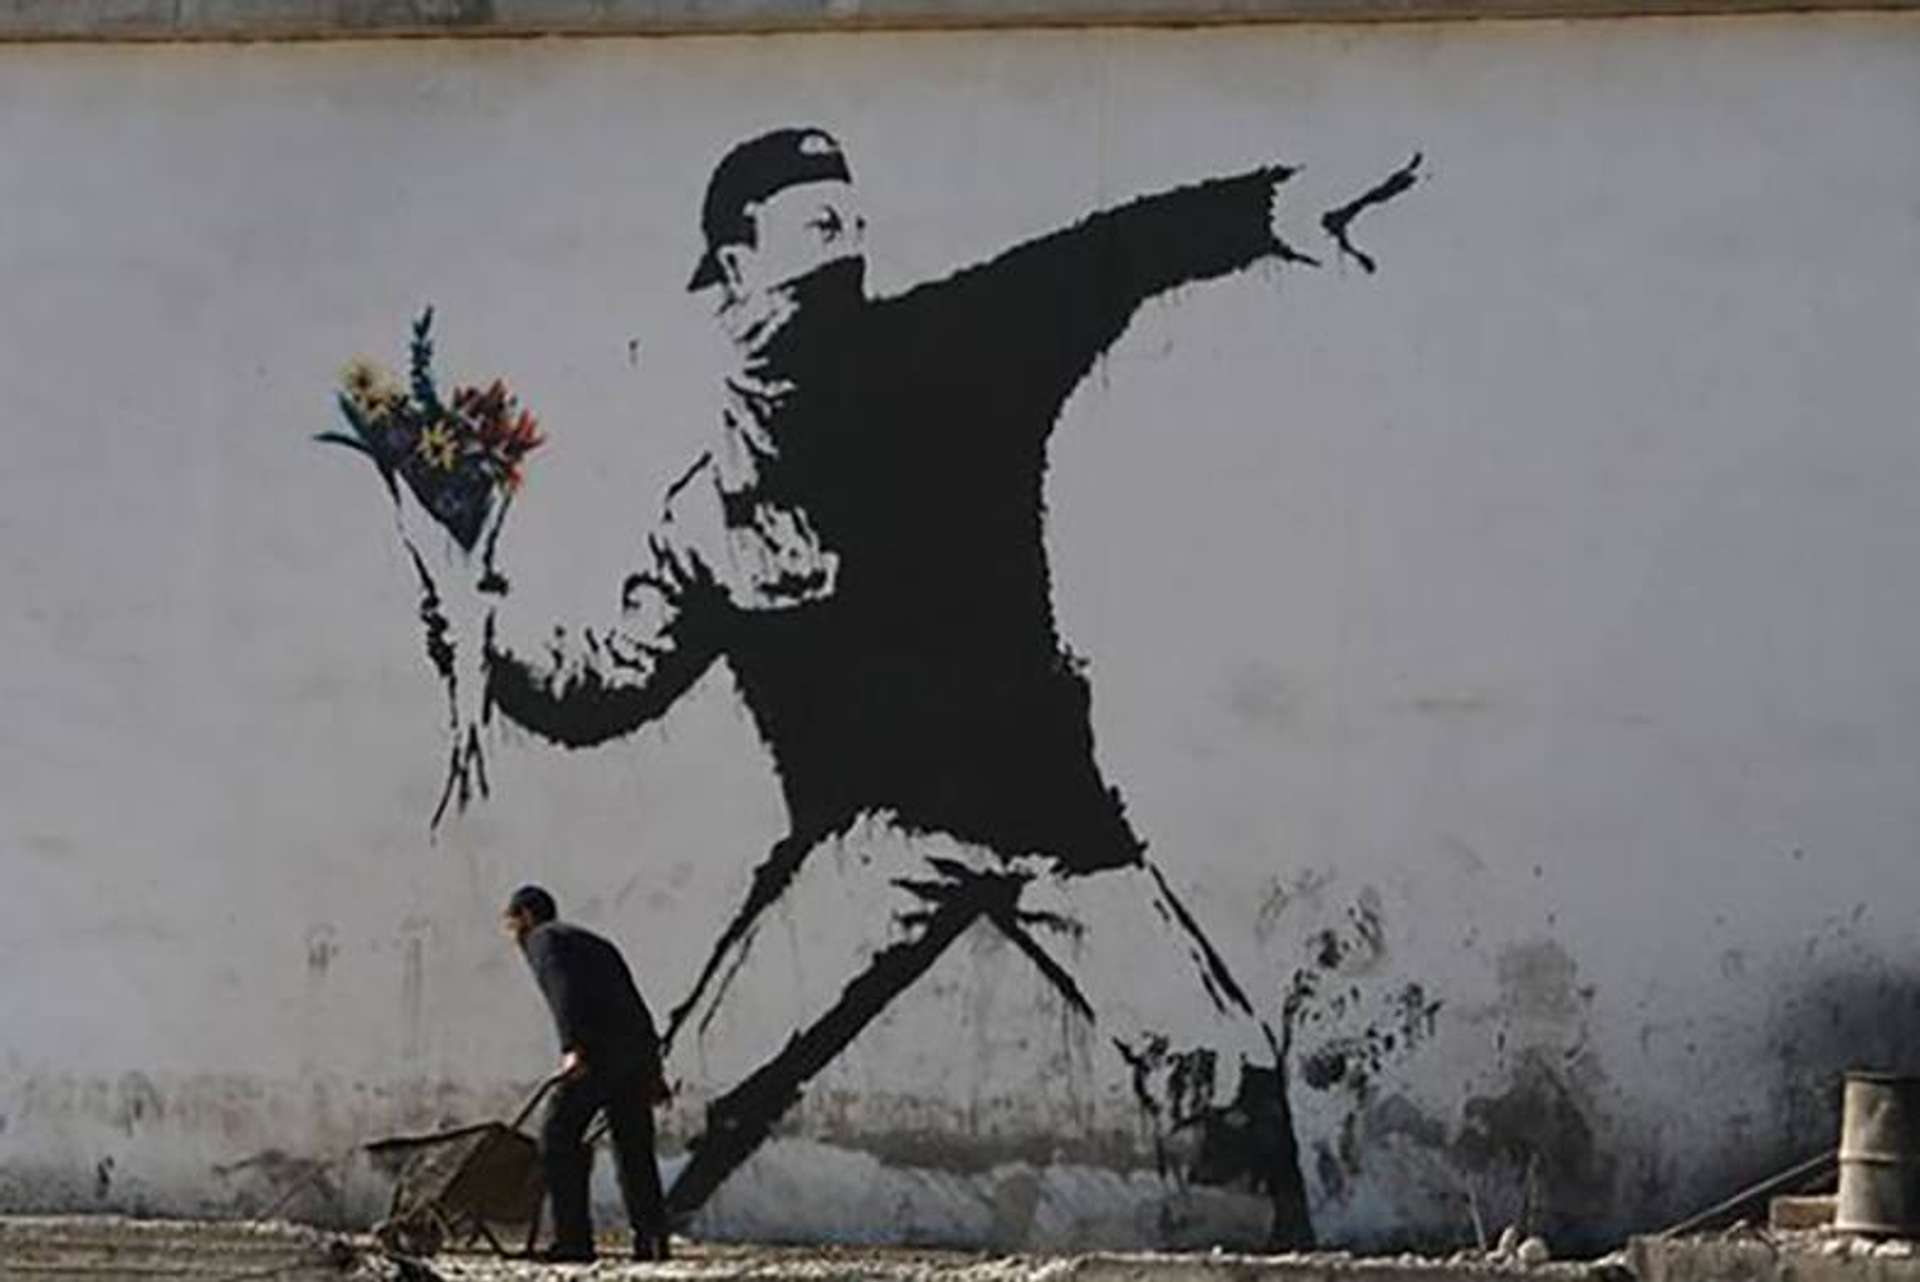 Flower Thrower (Palestine) by Banksy